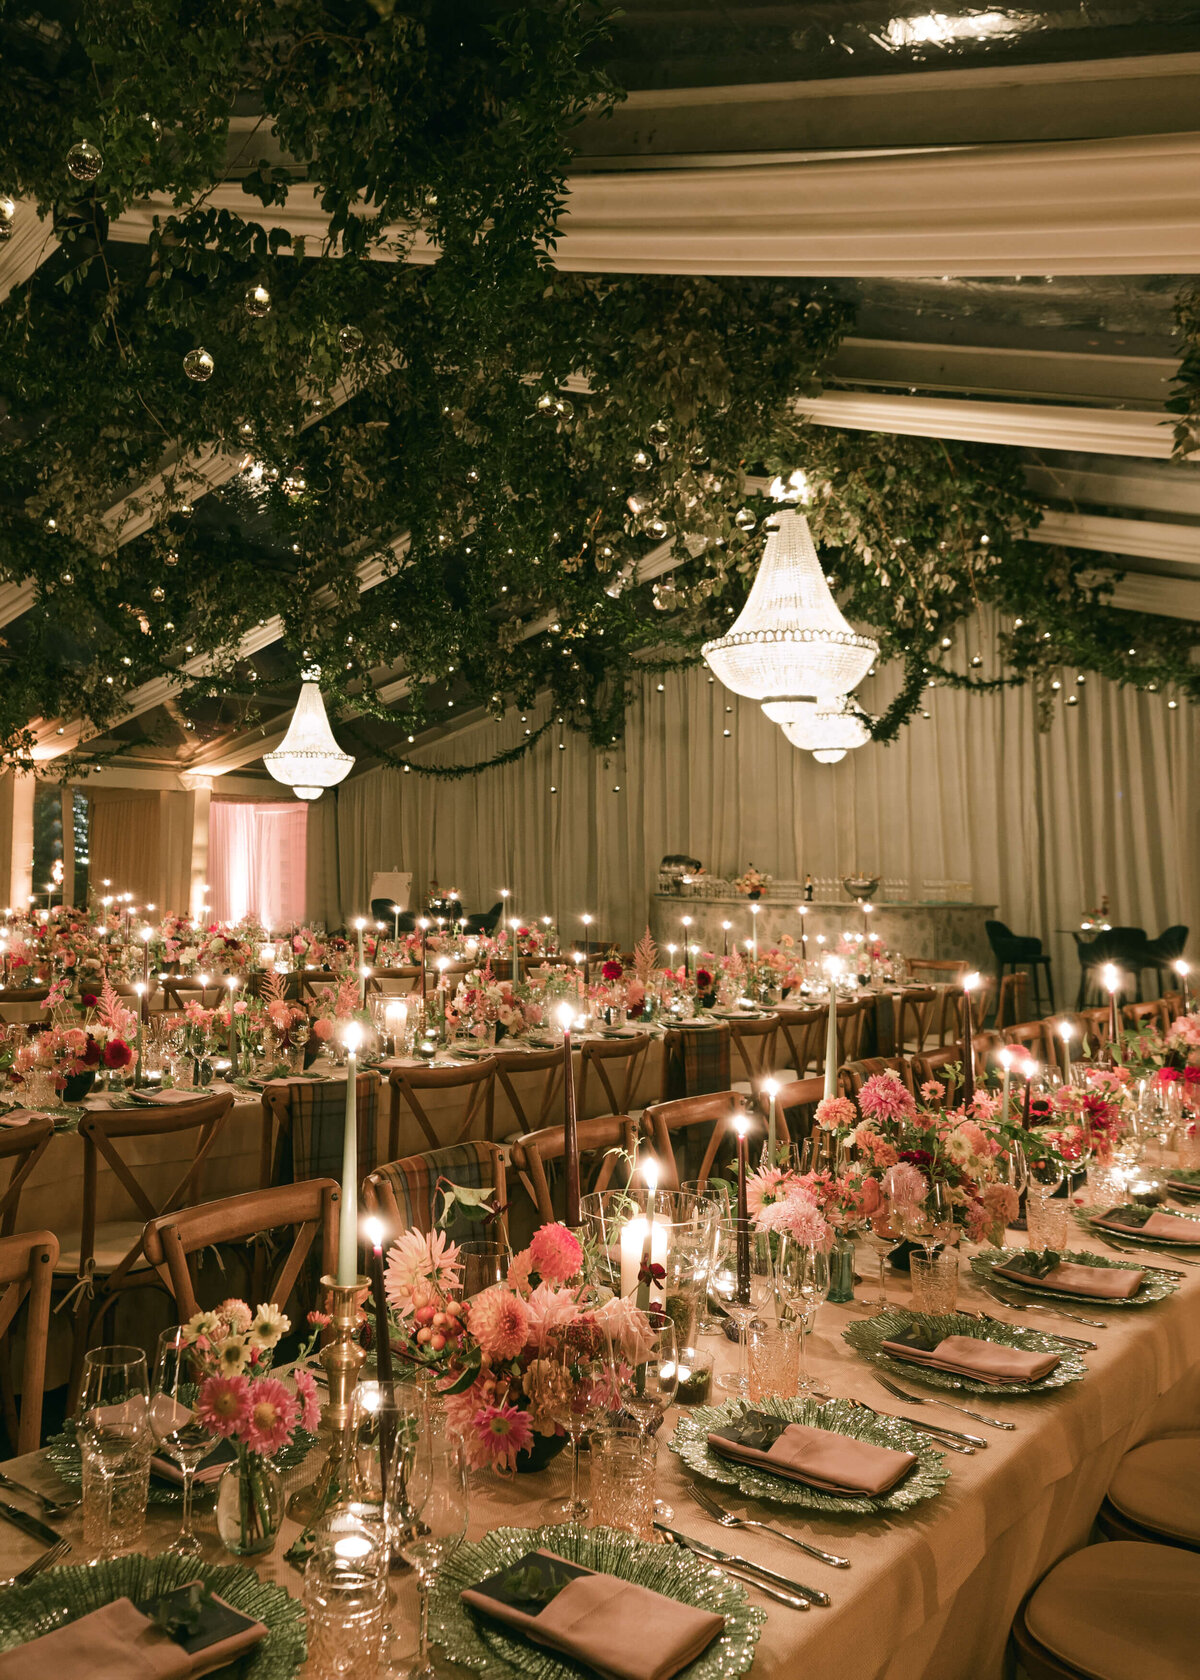 chloe-winstanley-wedding-oxford-gsp-winter-marquee-tables-bar